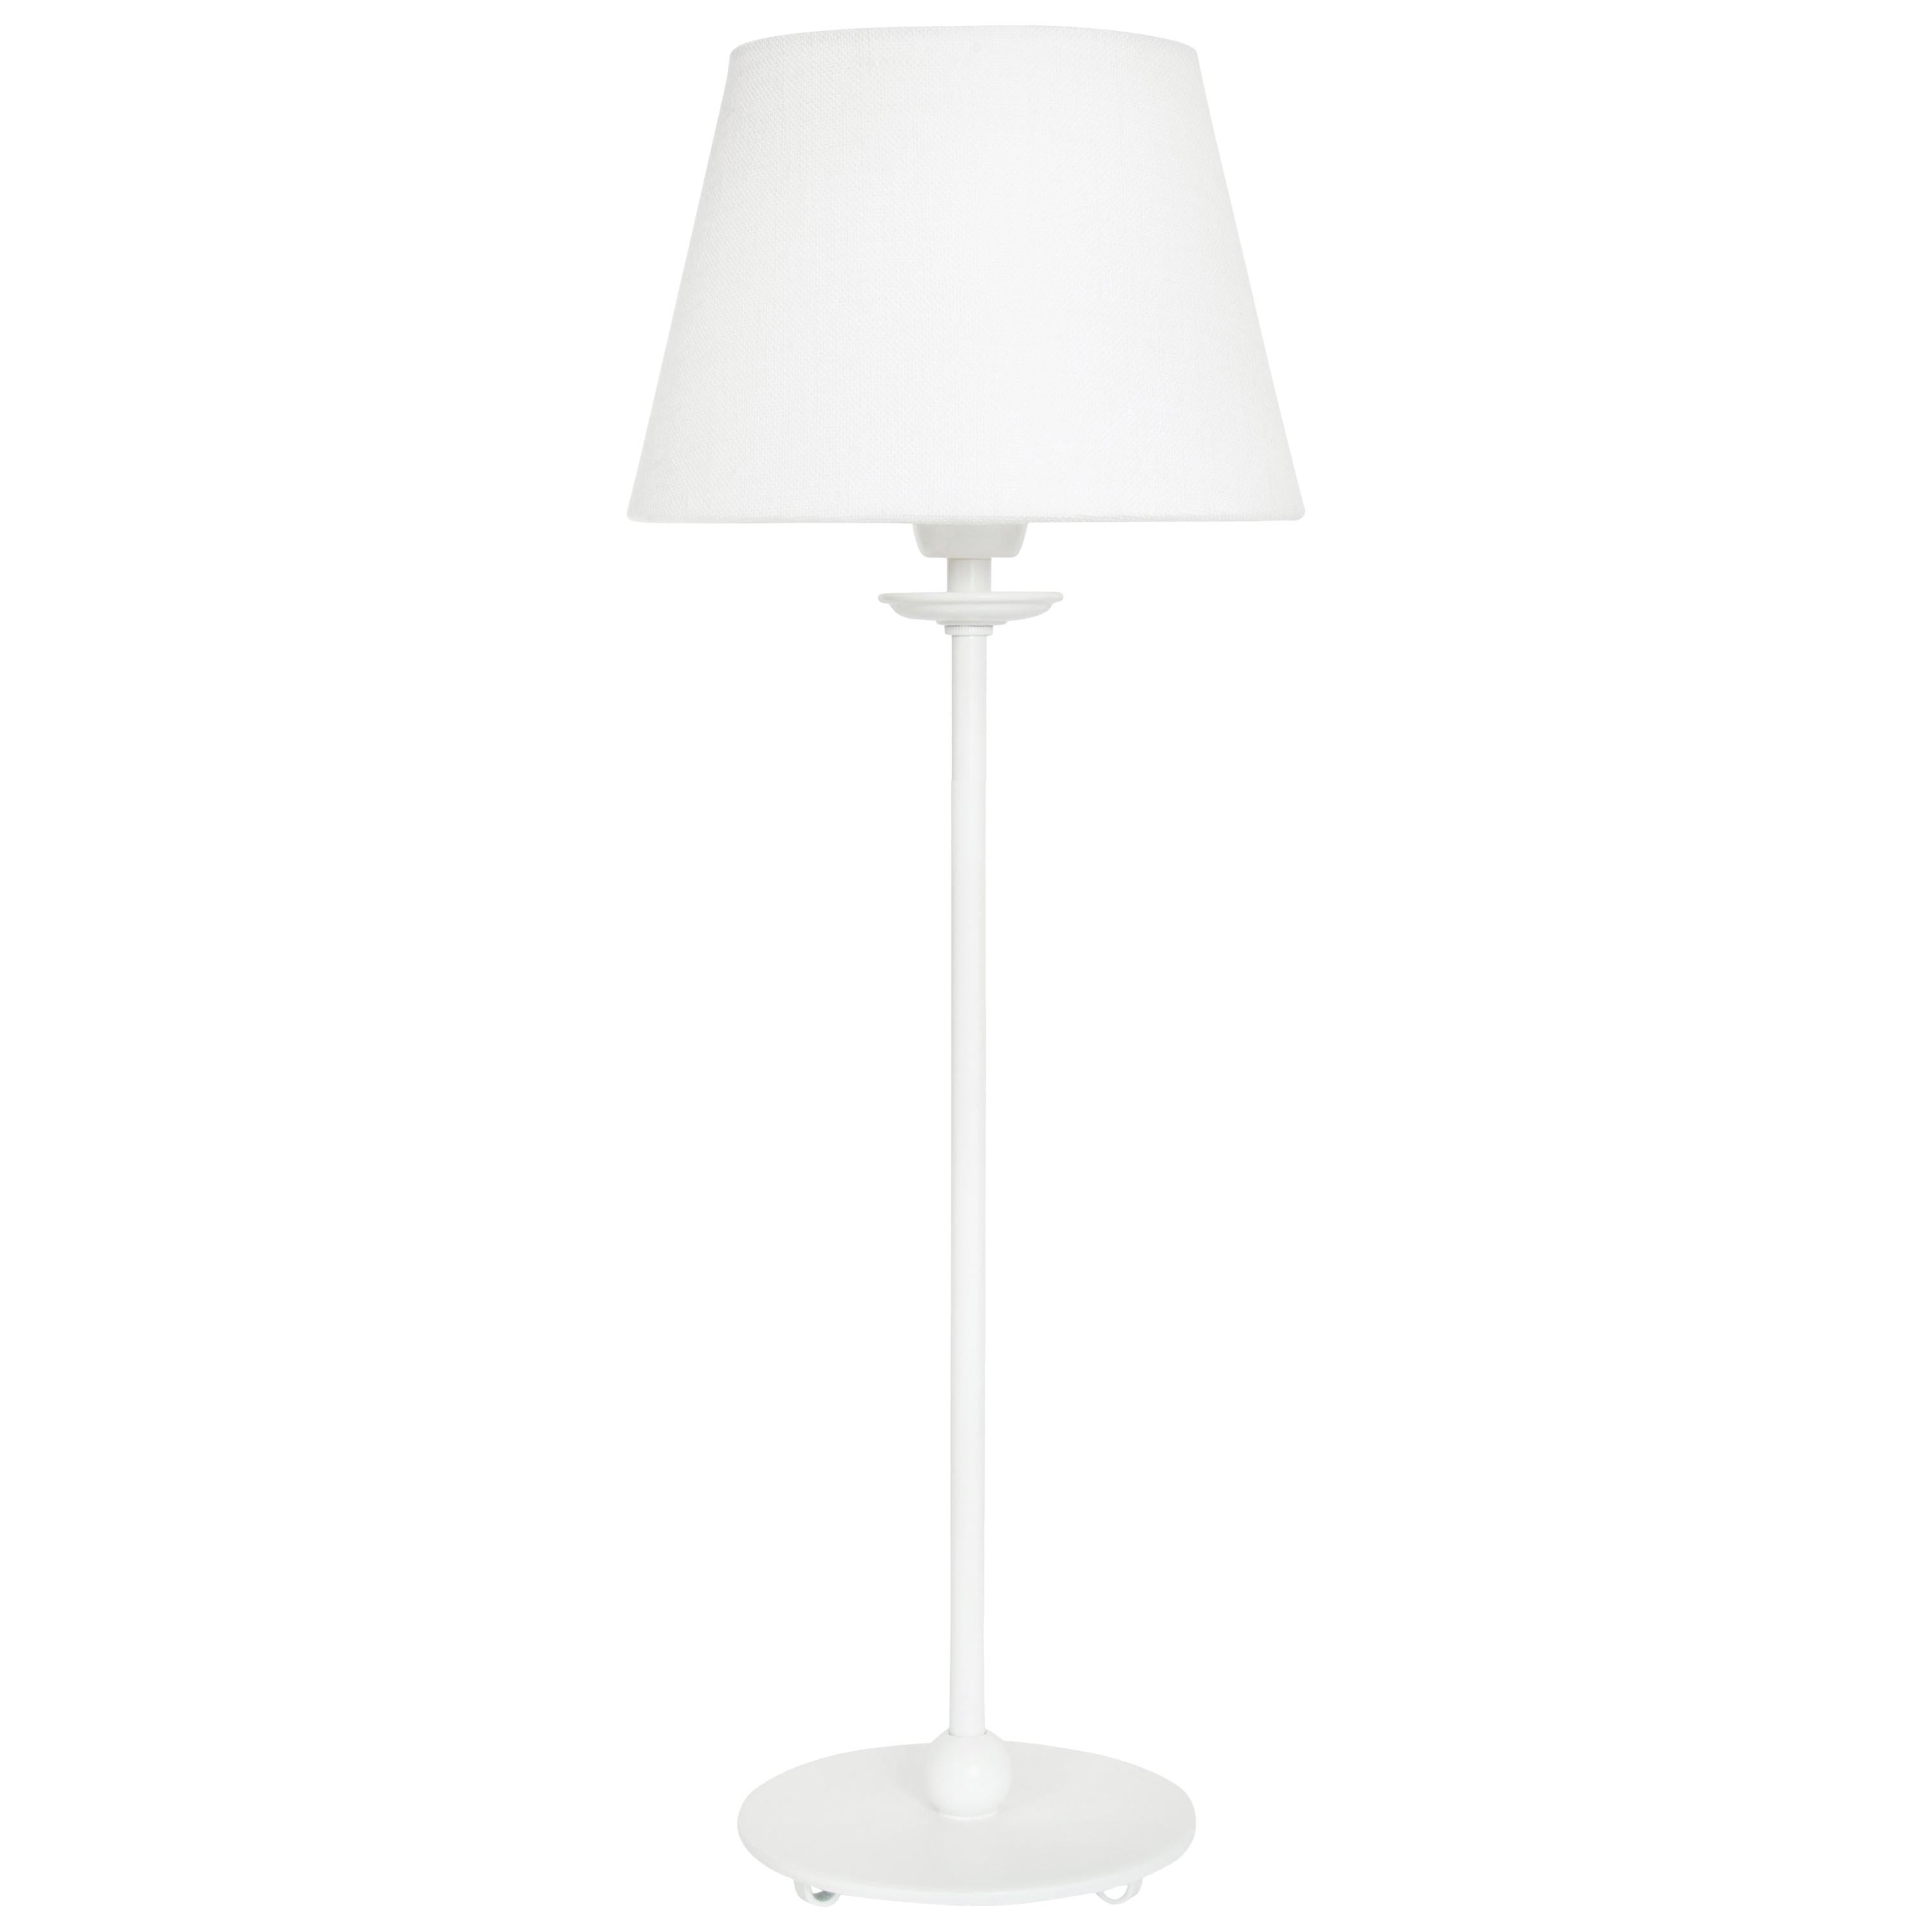 Konsthantverk Uno - Petite lampe de bureau blanche